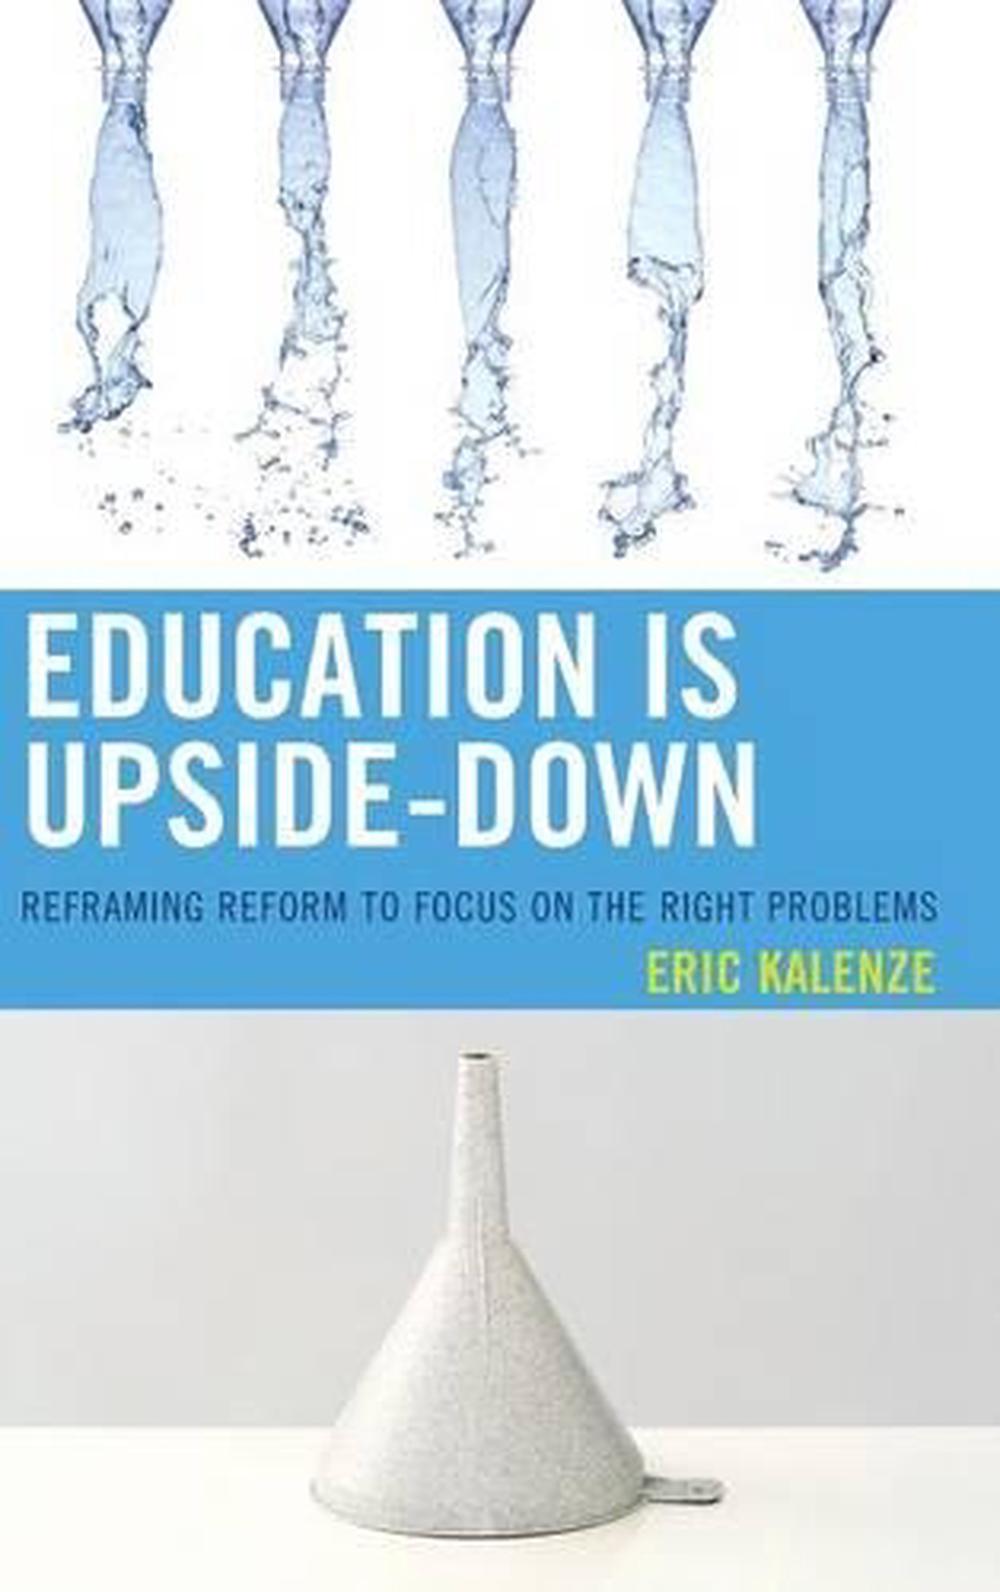 Education Reform Lost Focus On Education